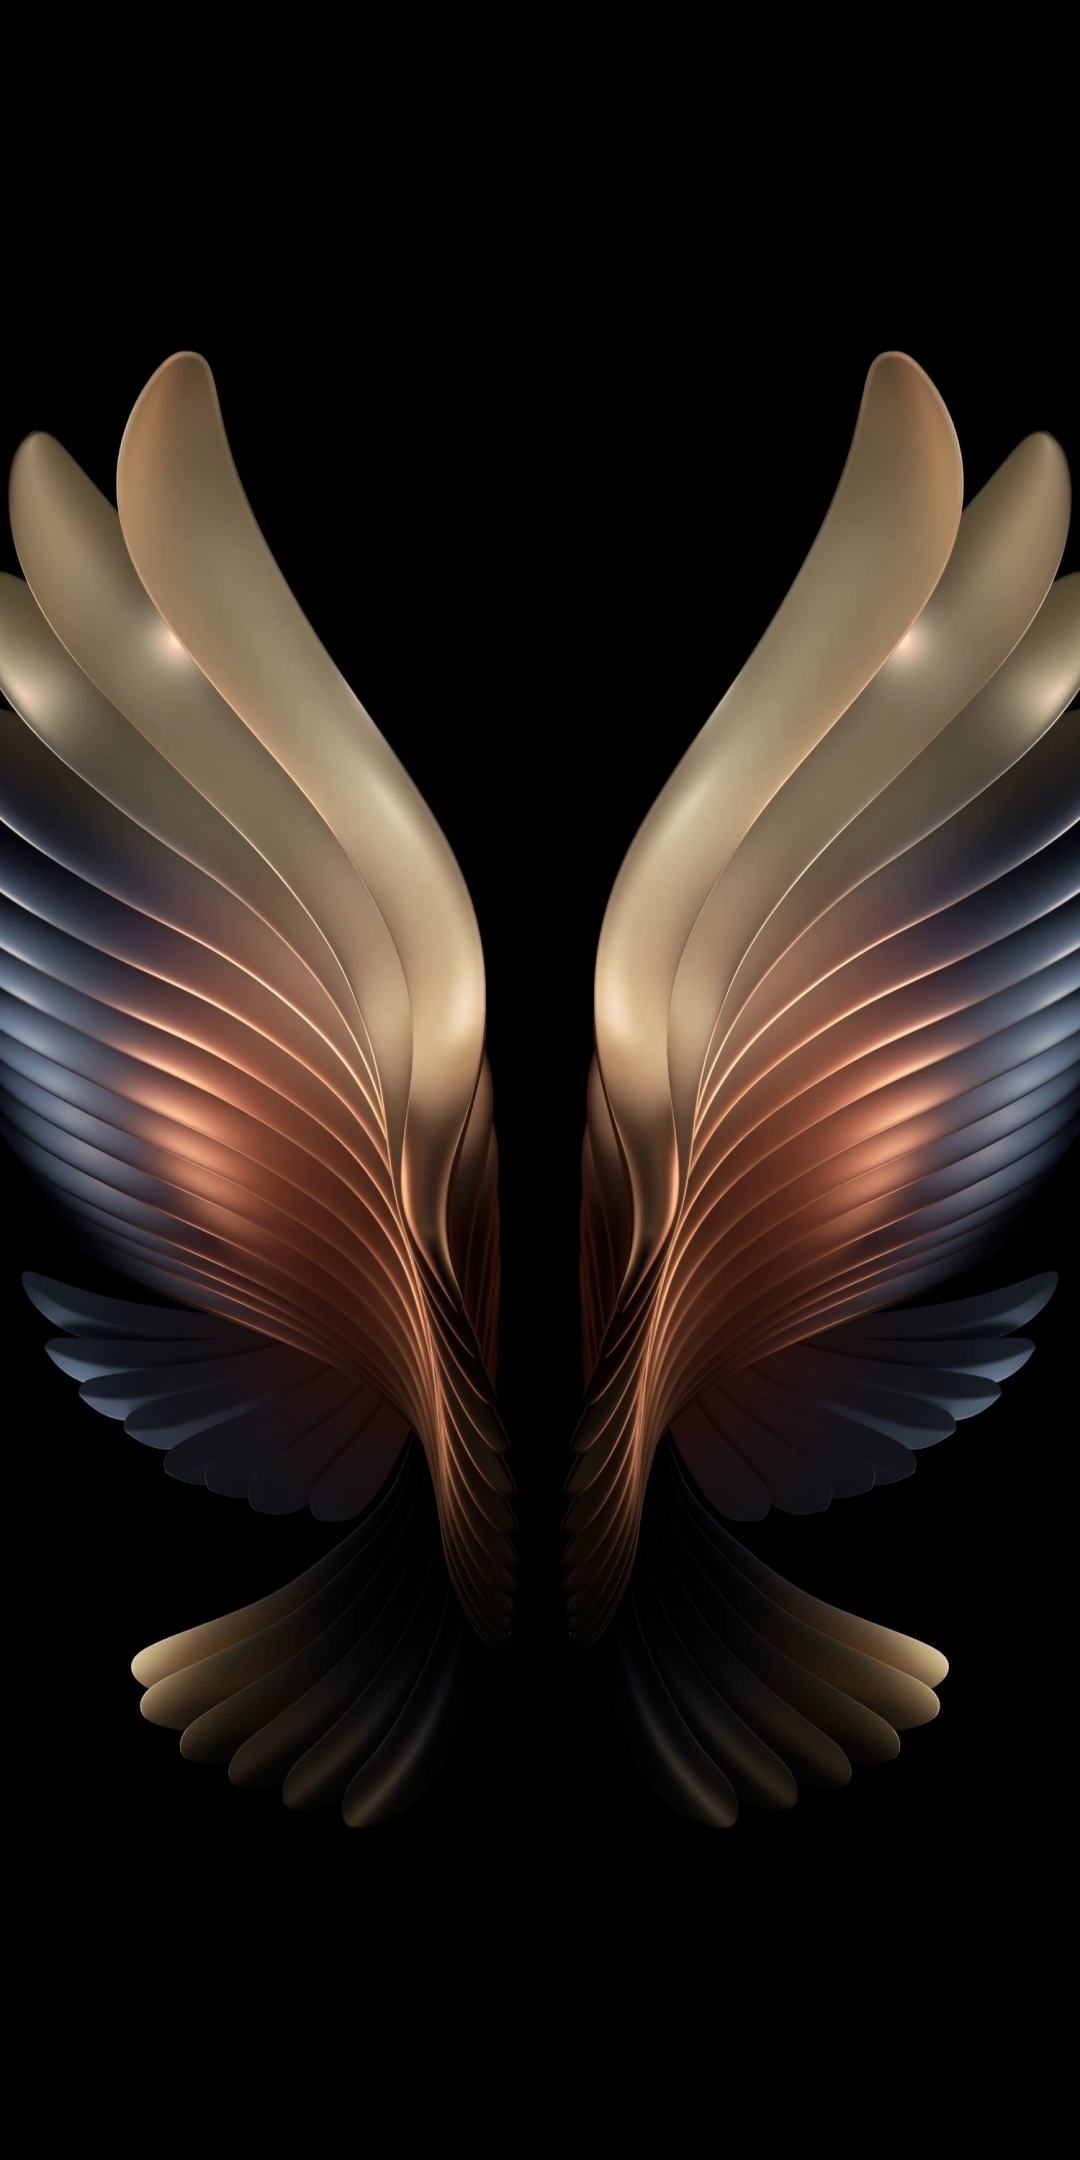 Amoled, angel wings, dark, 1080x2160 wallpaper